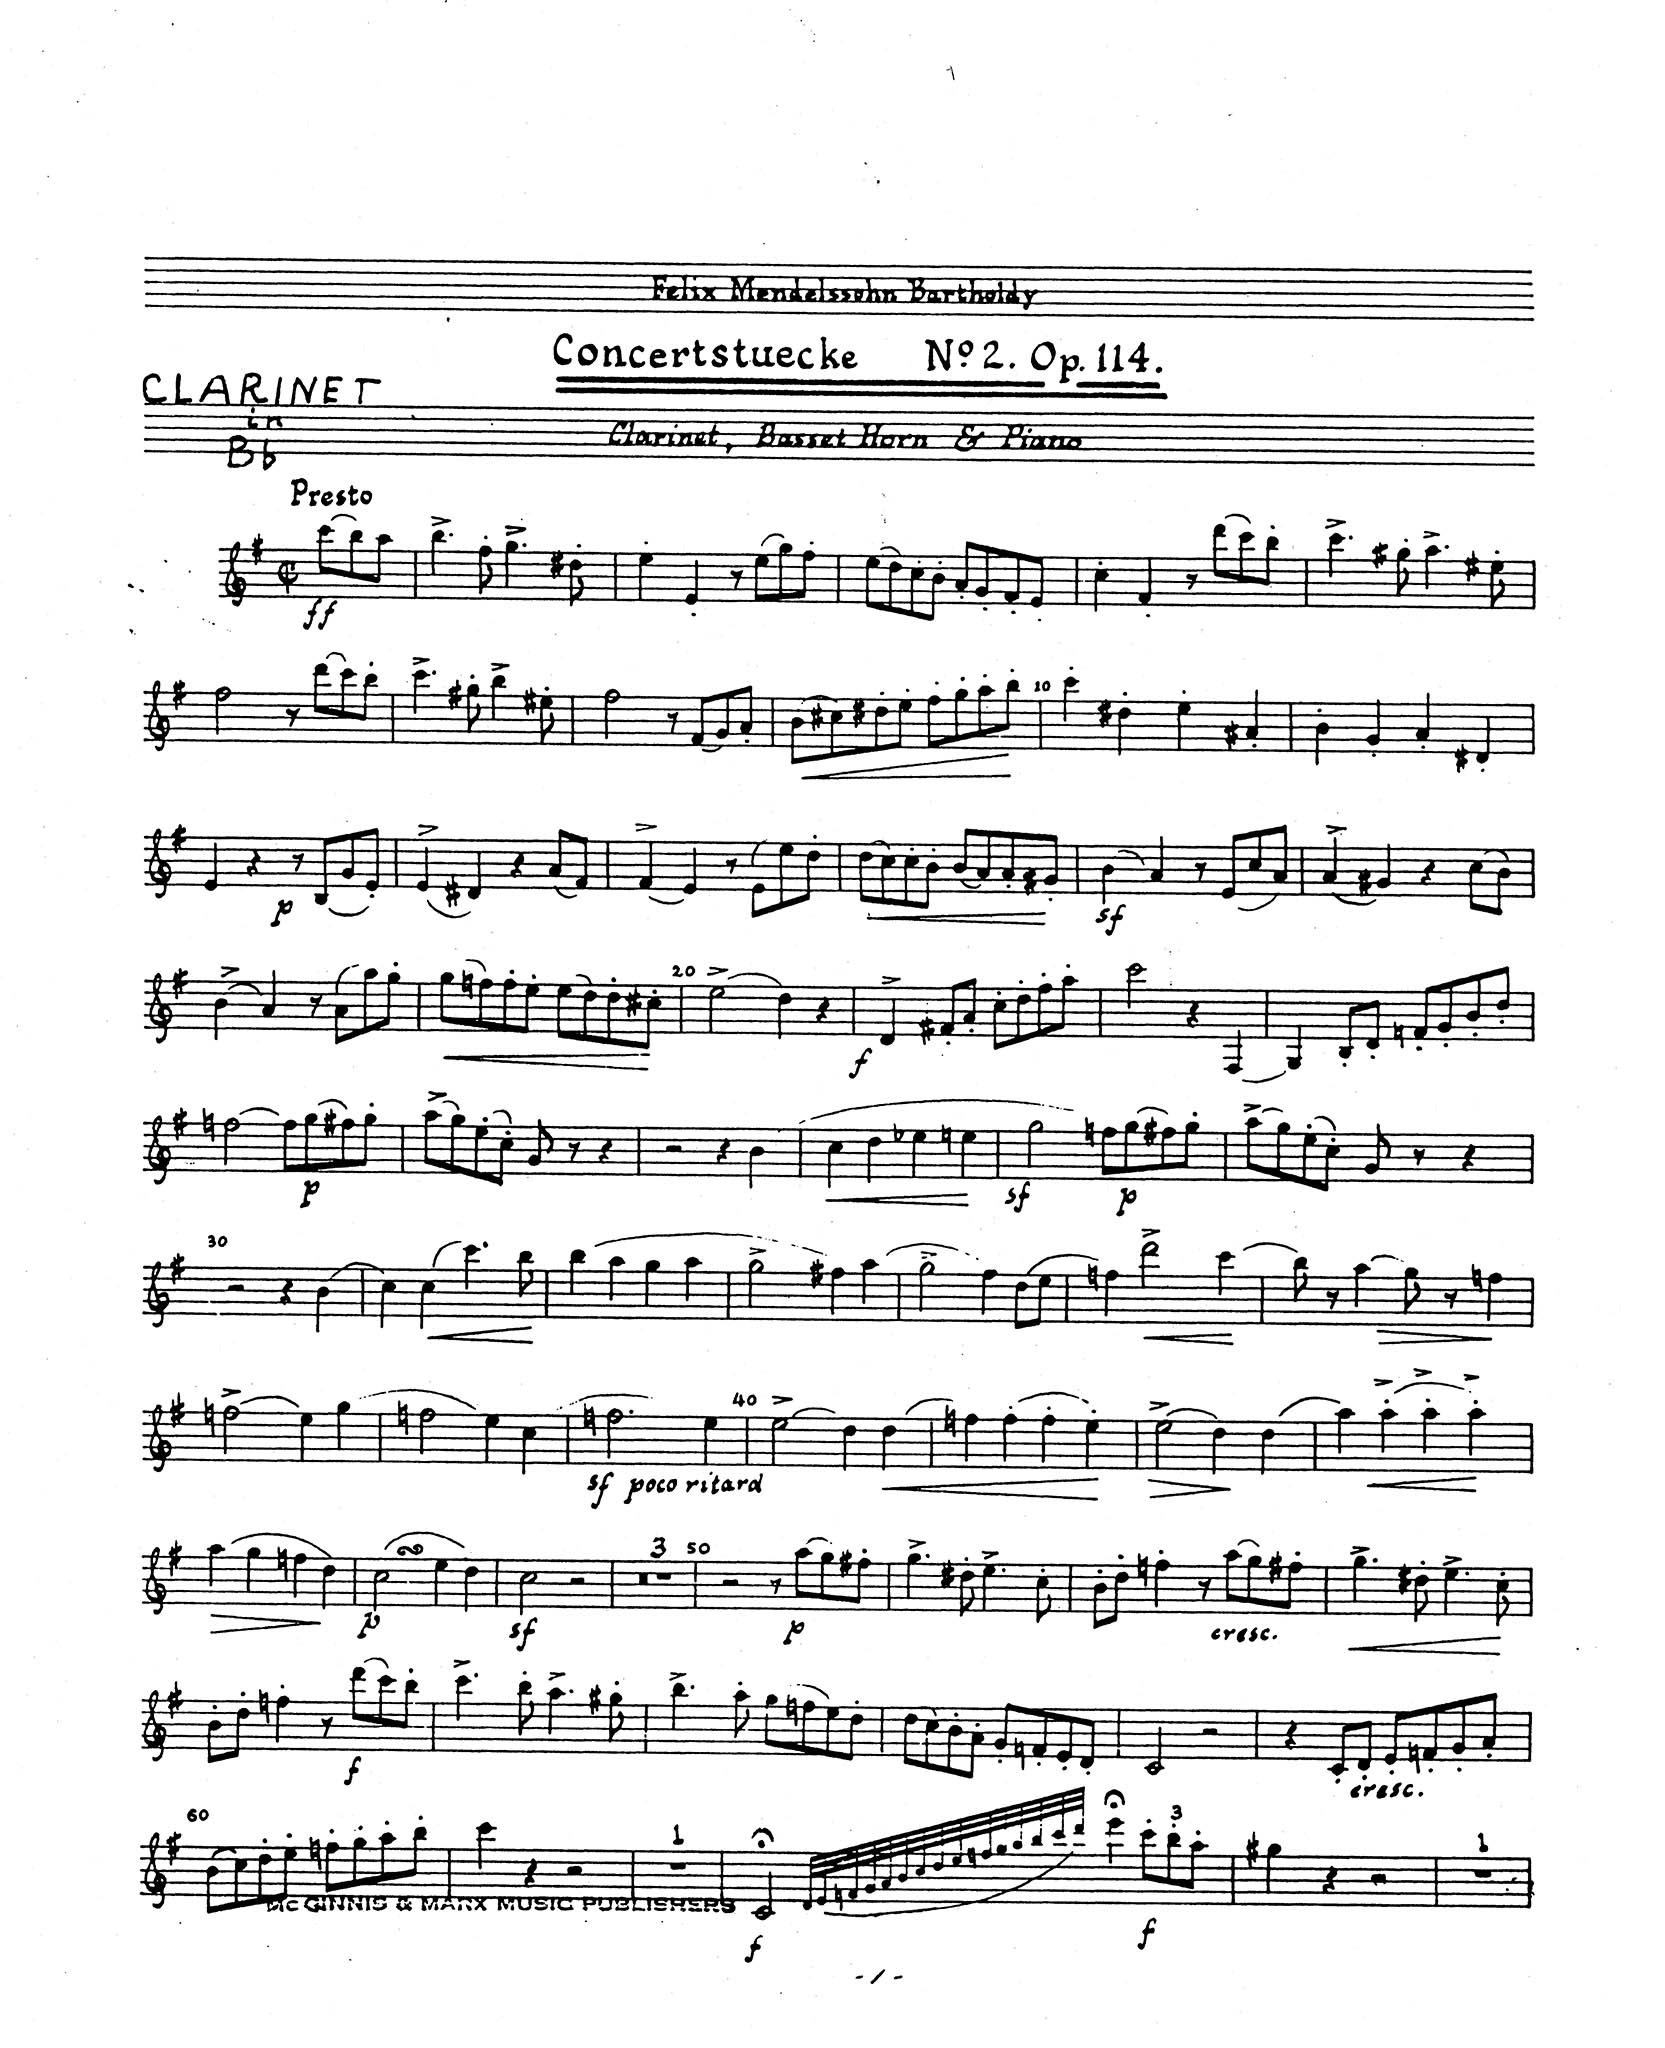 Konzertstück No. 2 in D Minor, Op. 114 B-flat Clarinet part